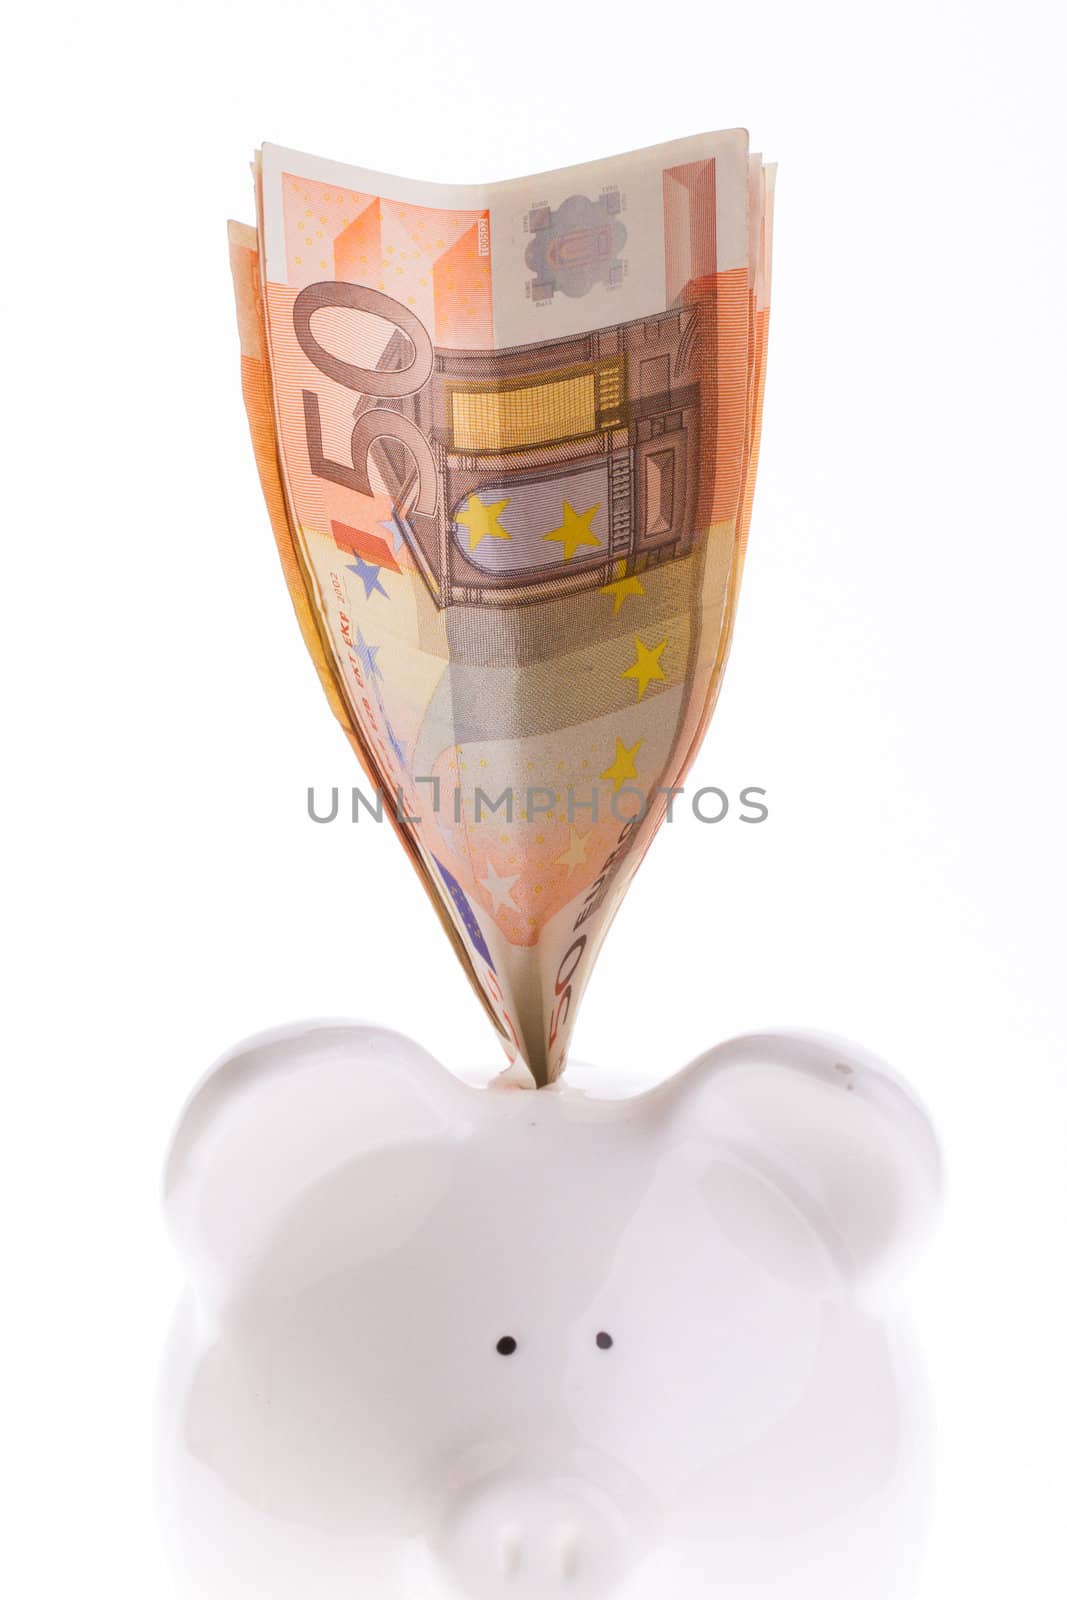 Saving fifty euro in a white money box